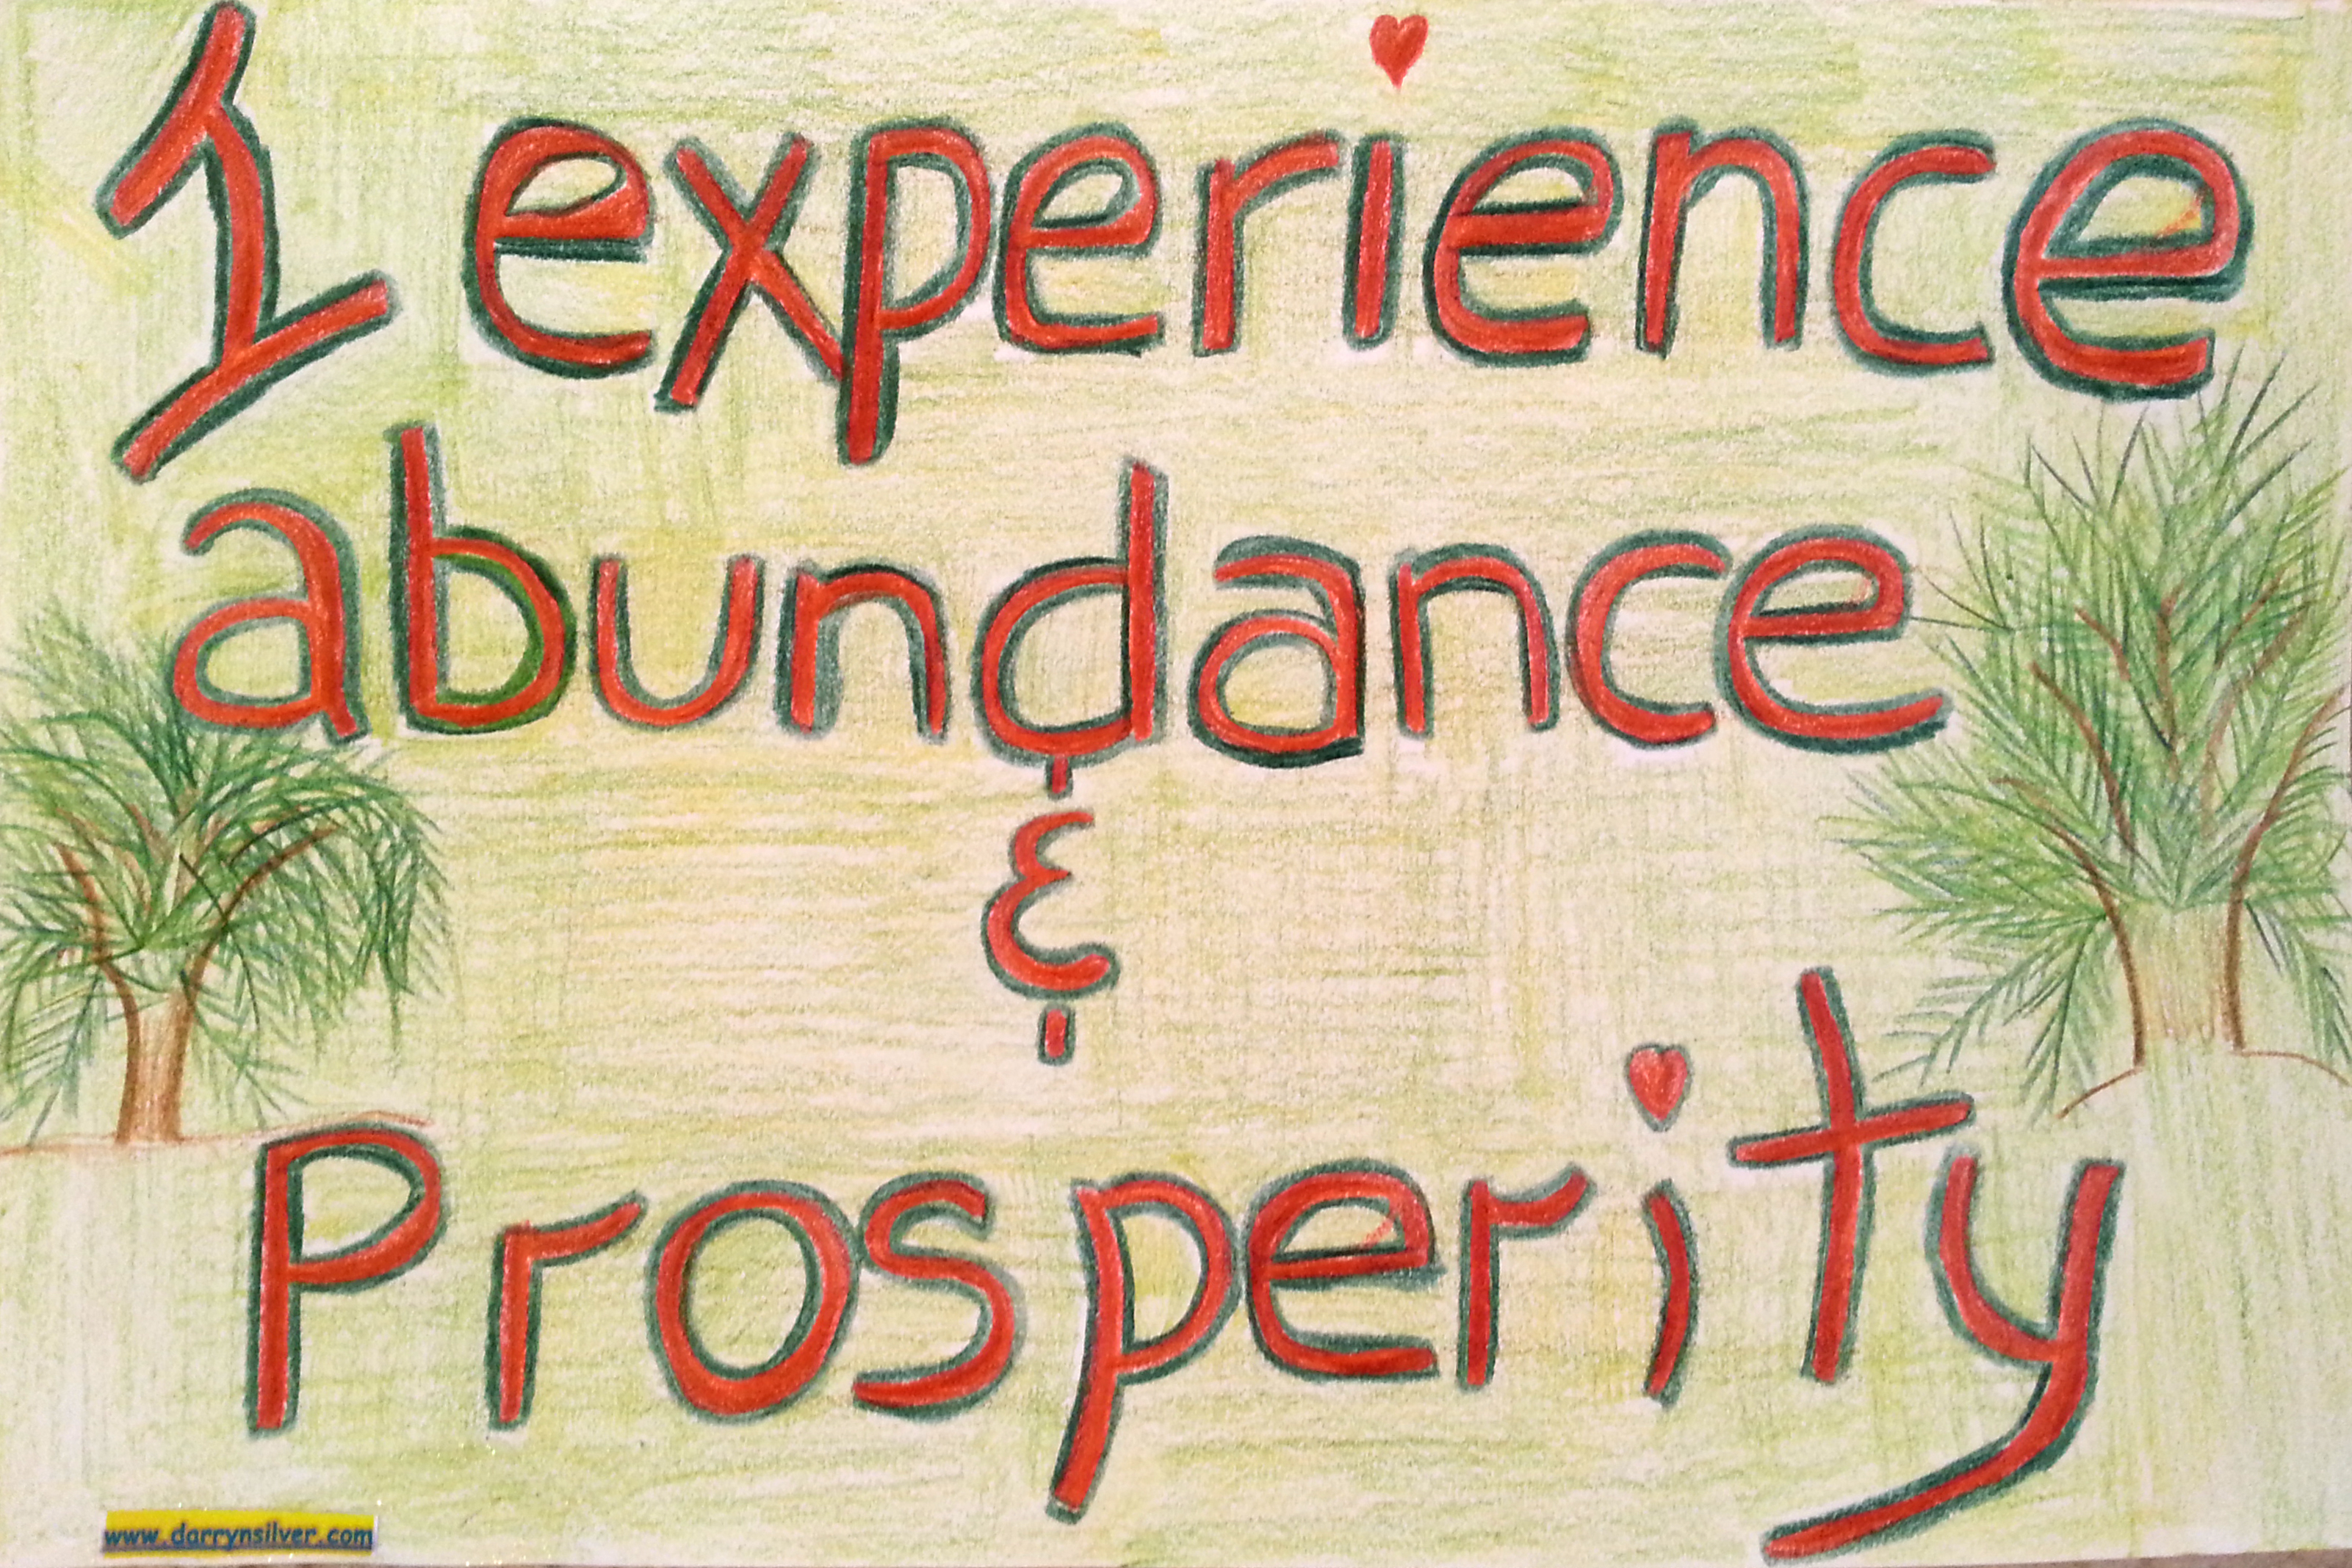 I Experience Abundance & Prosperity - Inspirational Sign - Darryn Silver